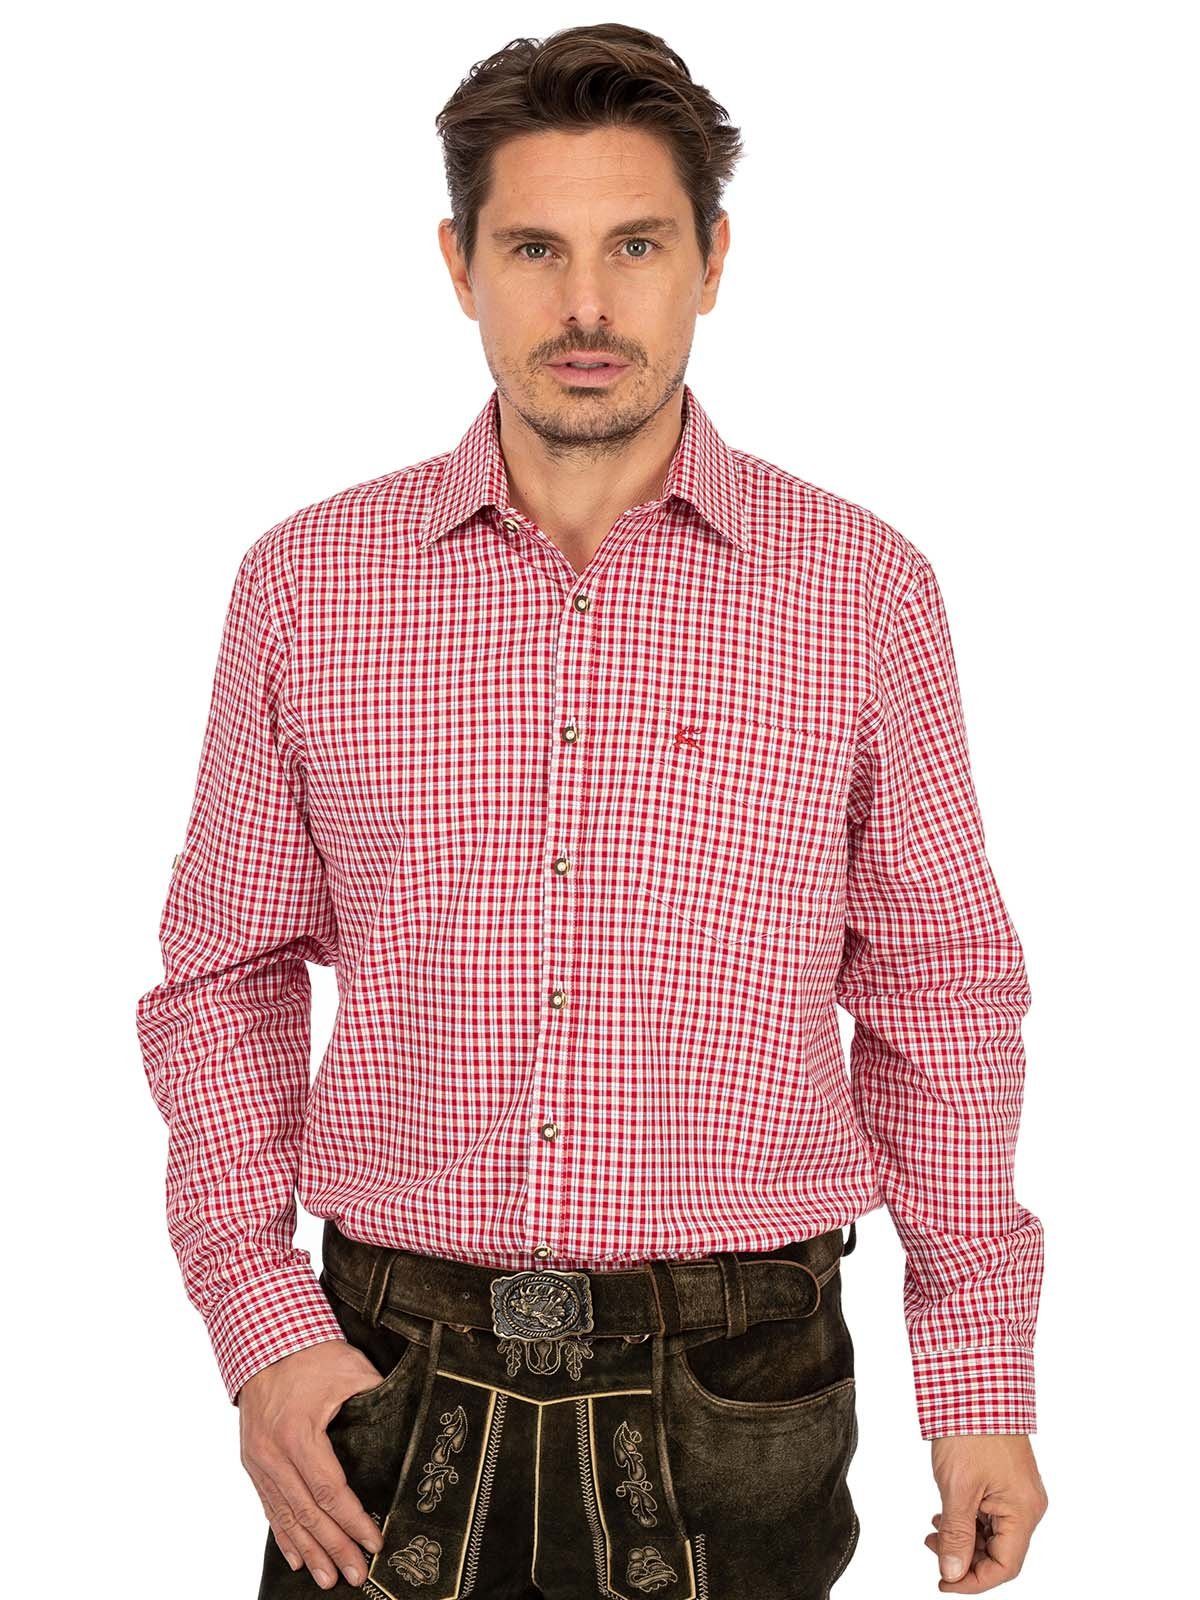 OS-Trachten Trachtenhemd Karo Langarmhemd ALBSTADT rot (Regular Fit